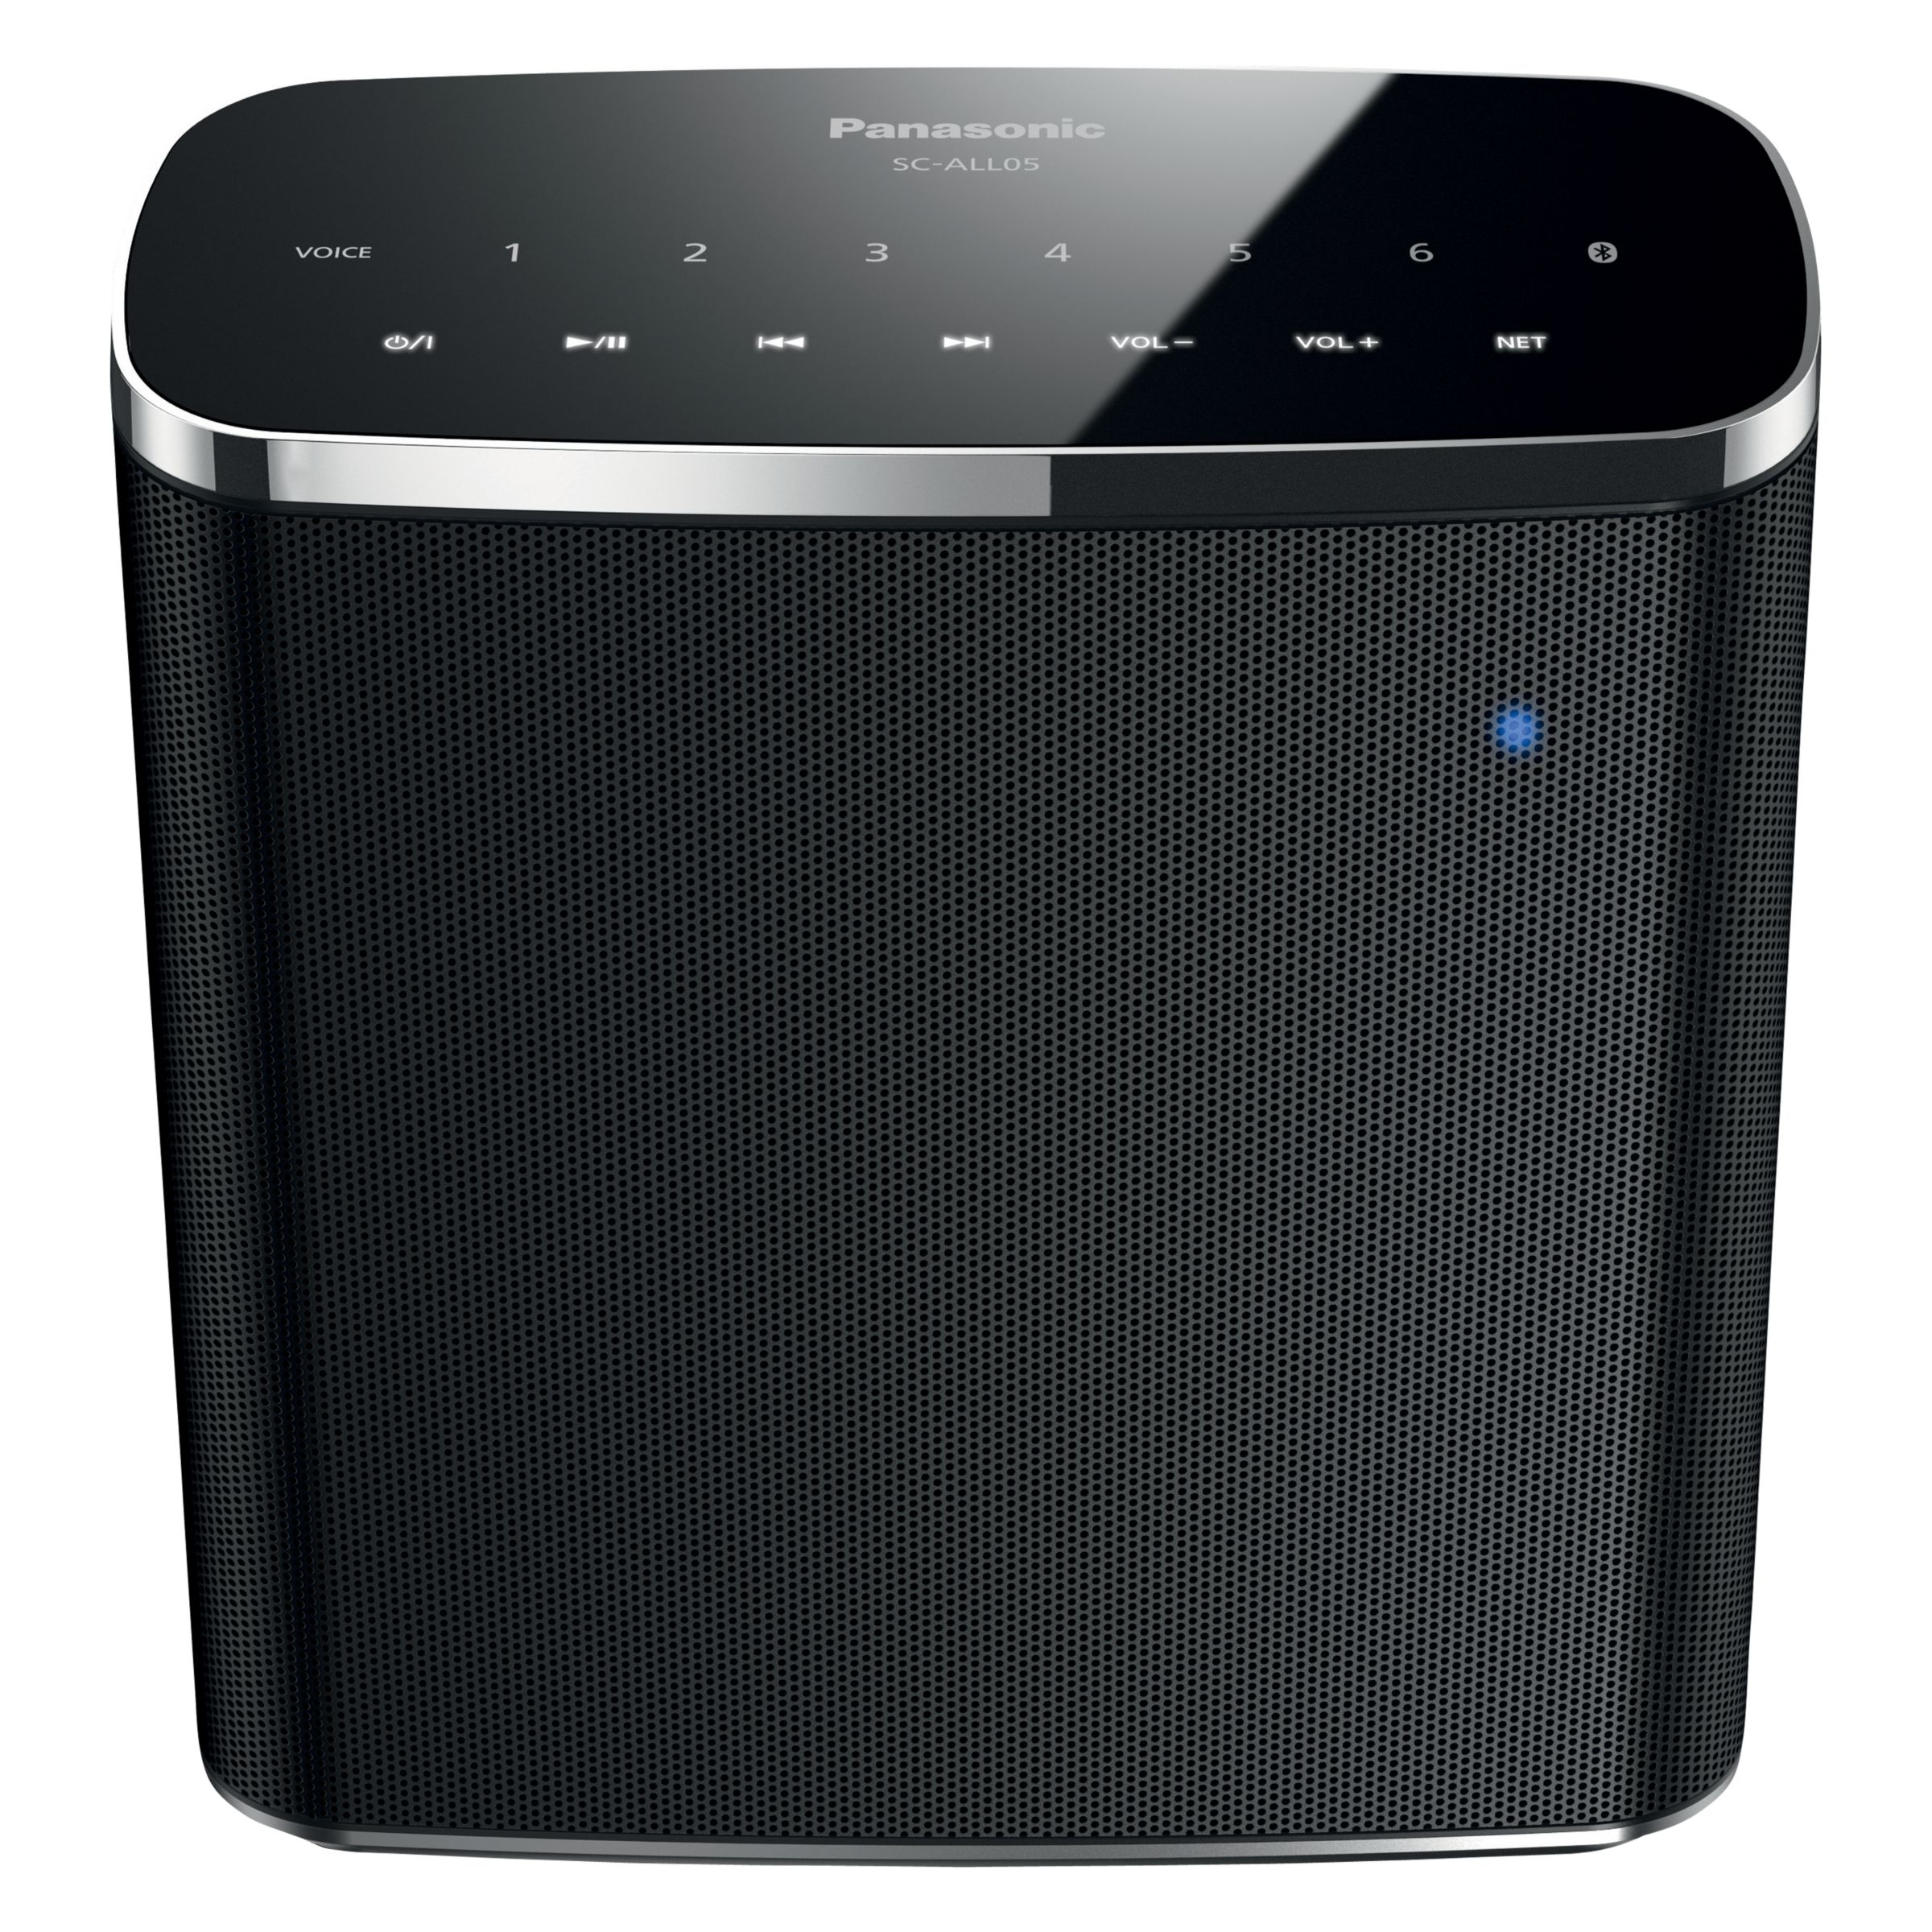 Panasonic SC-ALL05 Multiroom Waterproof Bluetooth Portable Speaker at